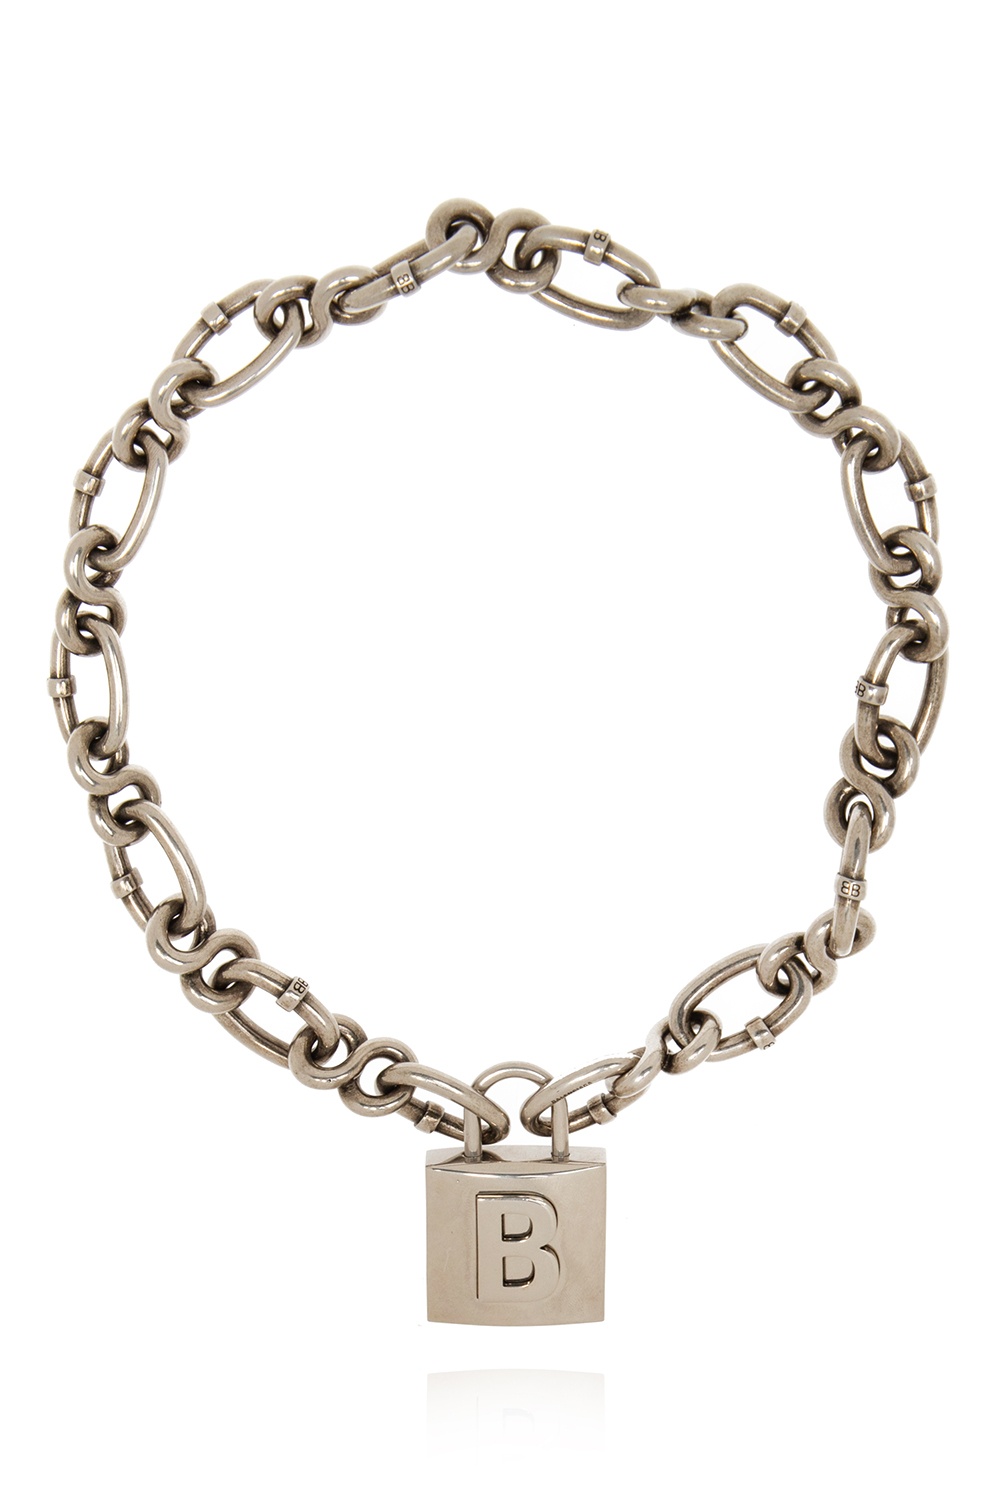 Balenciaga Lock Chain Necklace in Metallic